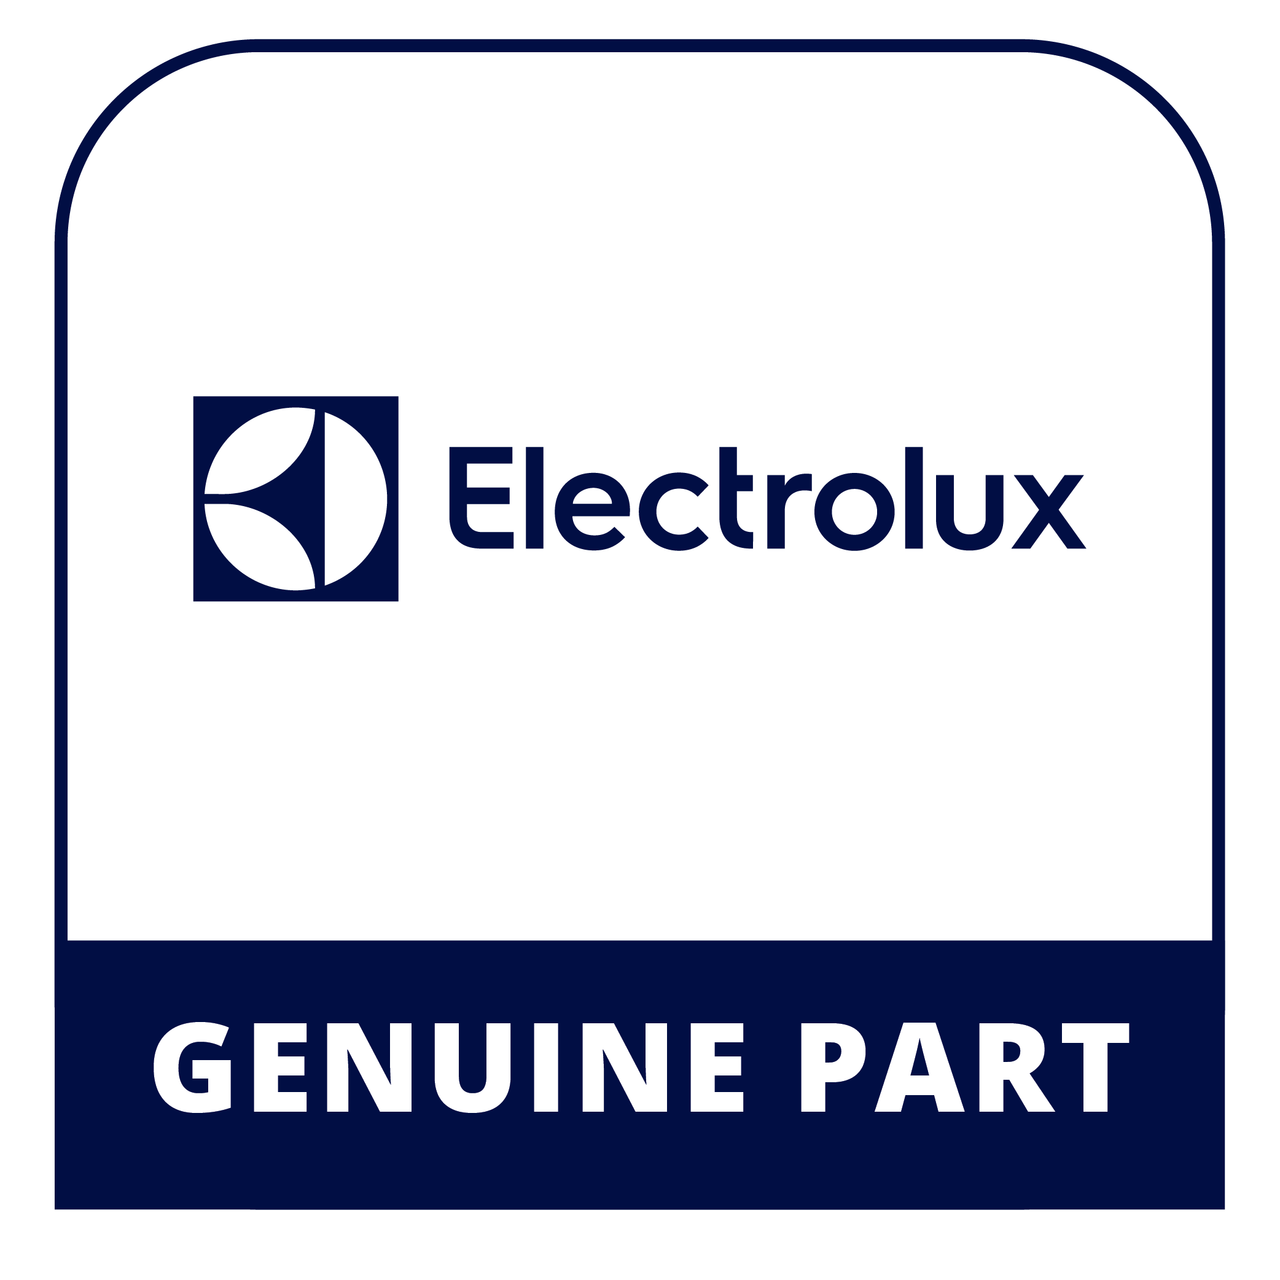 Frigidaire - Electrolux 5304460967 - O-Ring - Genuine Electrolux Part